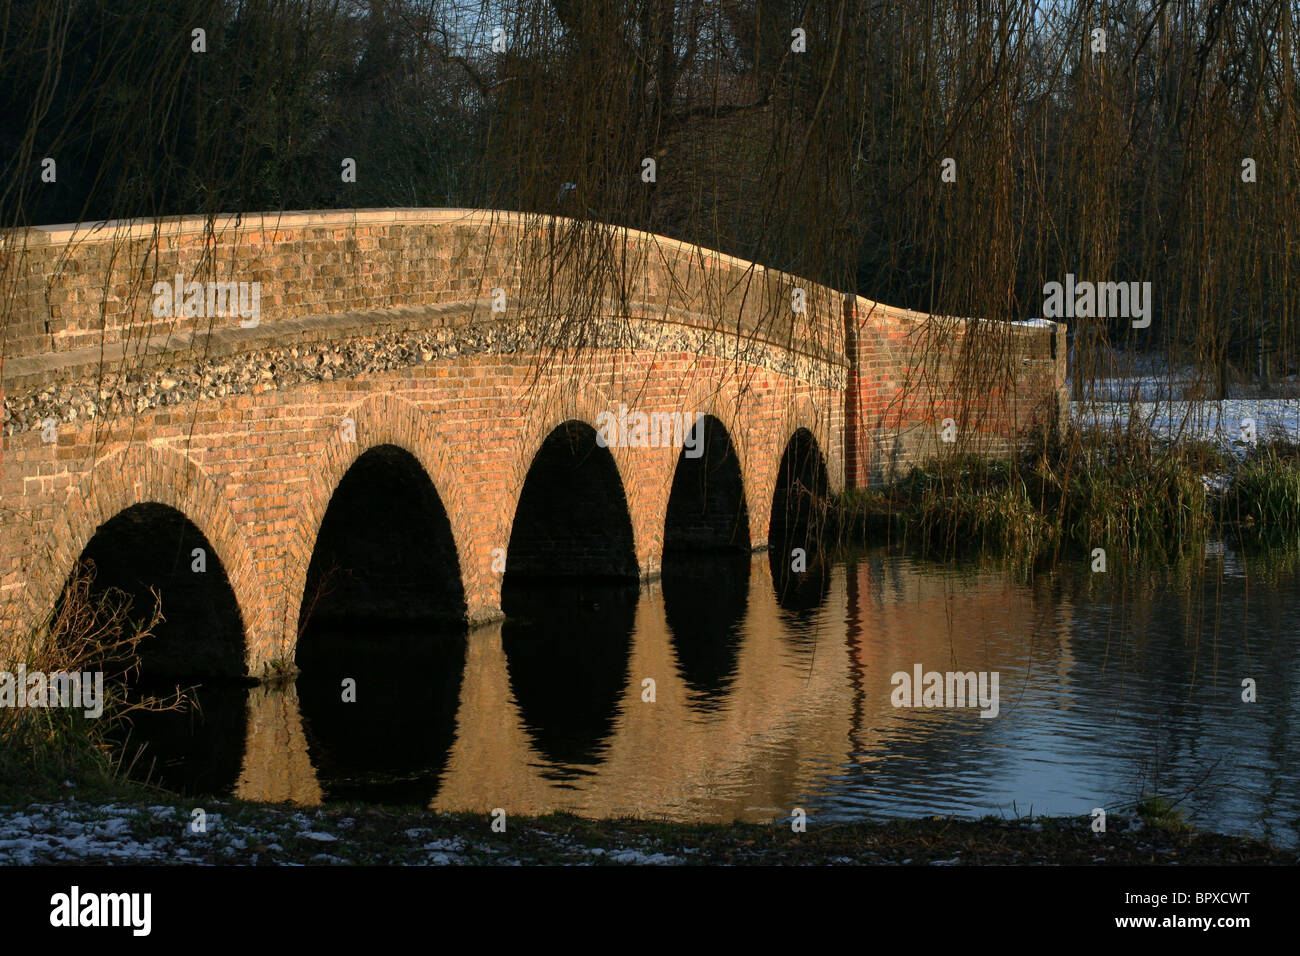 Bridge of reflection Stock Photo